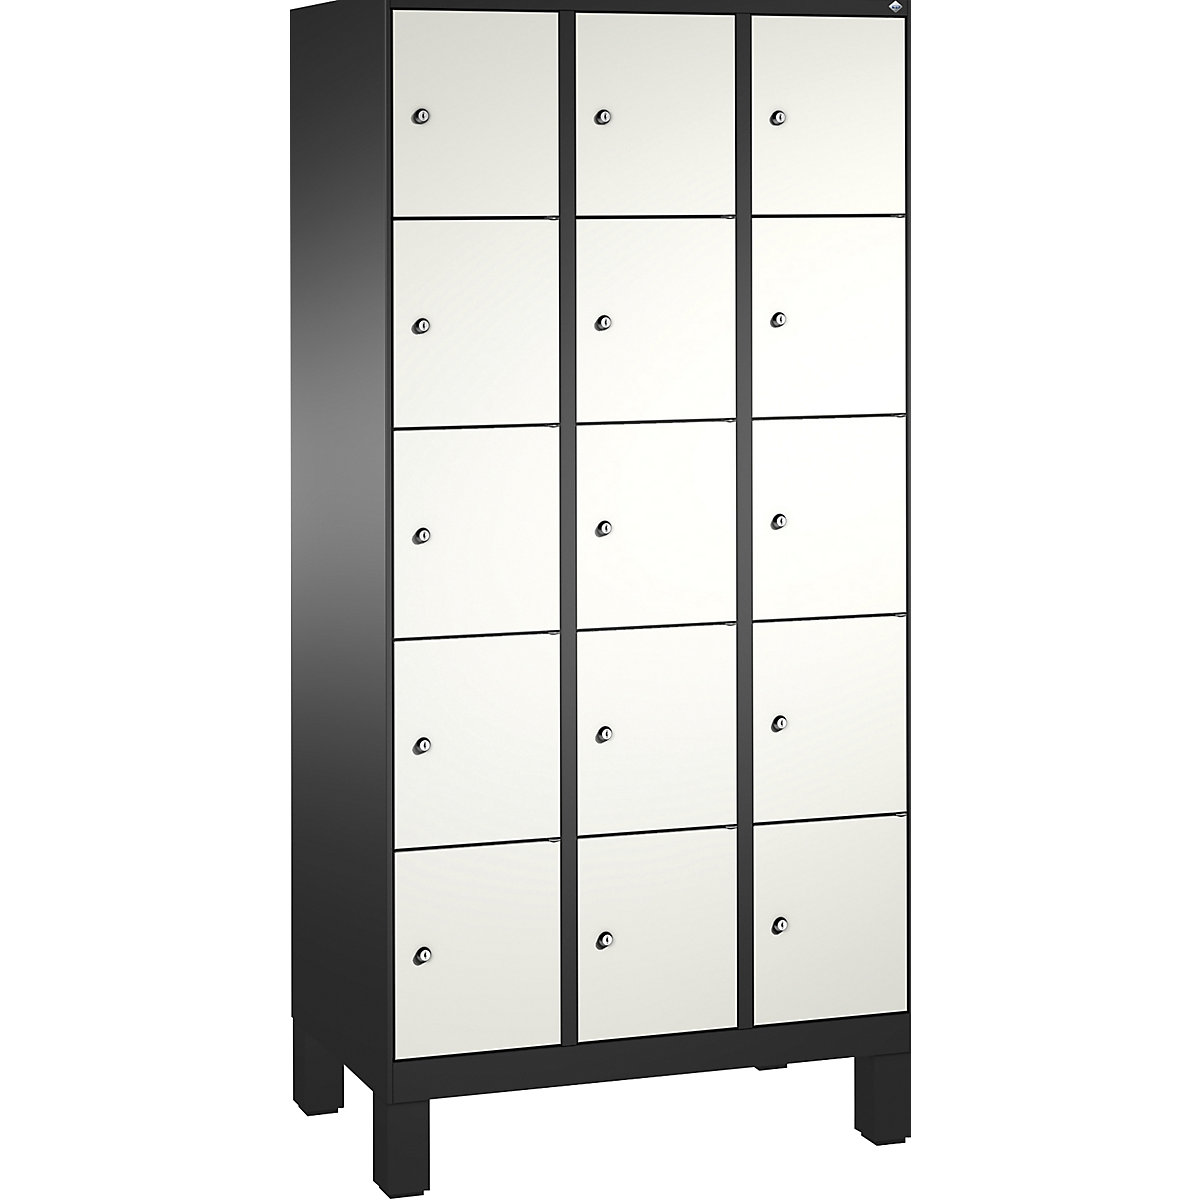 EVOLO locker unit, with feet – C+P, 3 compartments, 5 shelf compartments each, compartment width 300 mm, black grey / traffic white-6